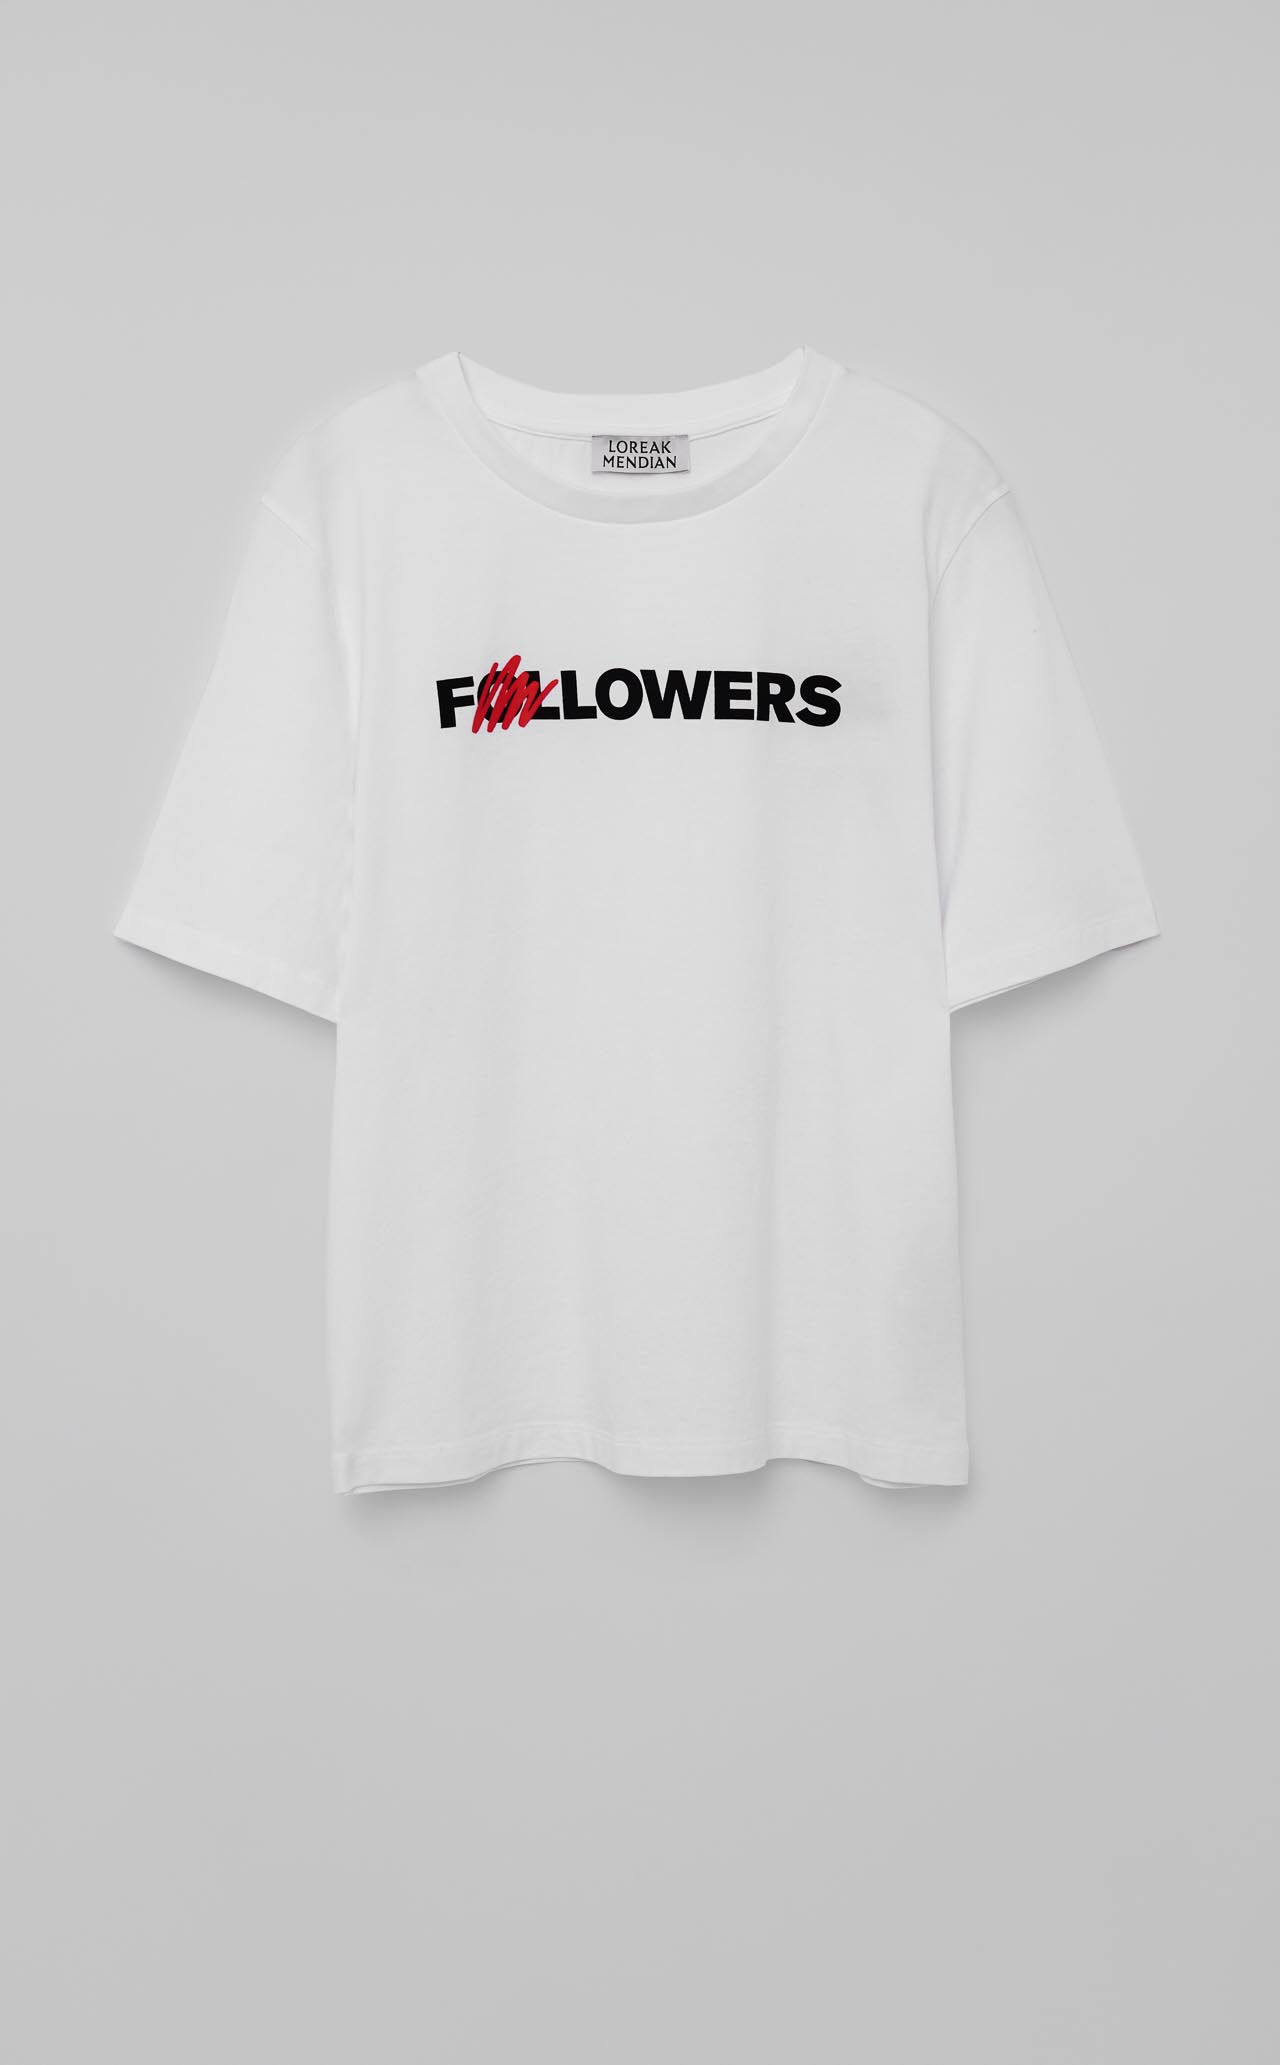 Camiseta Followers